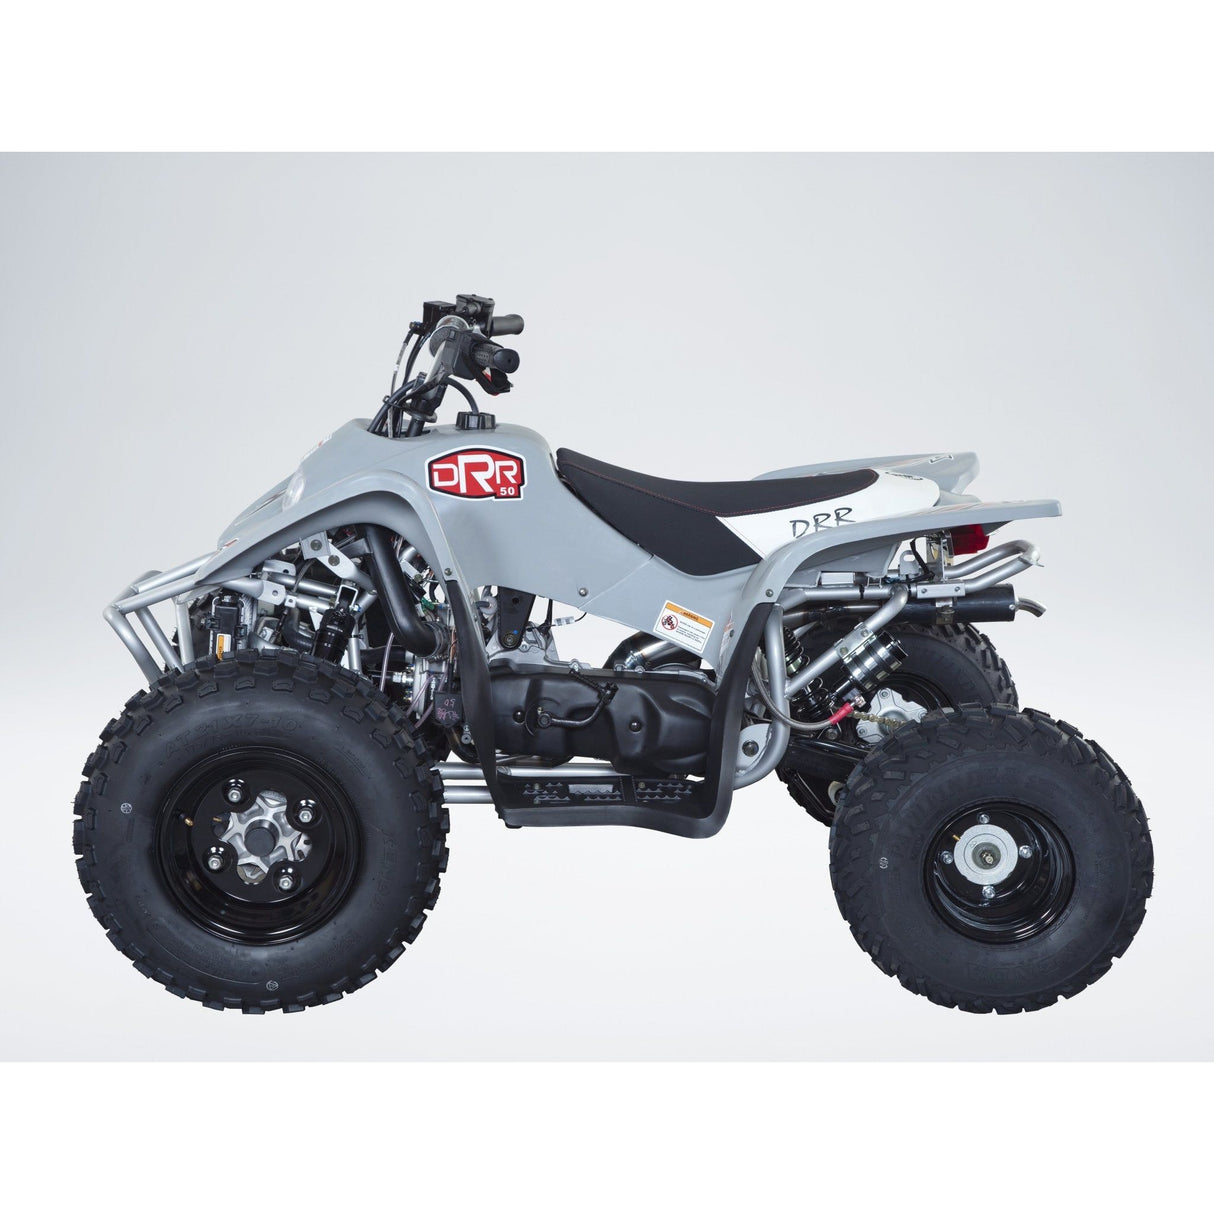 2020 DRR DRX 90cc ATV - G-FORCE POWERSPORTS